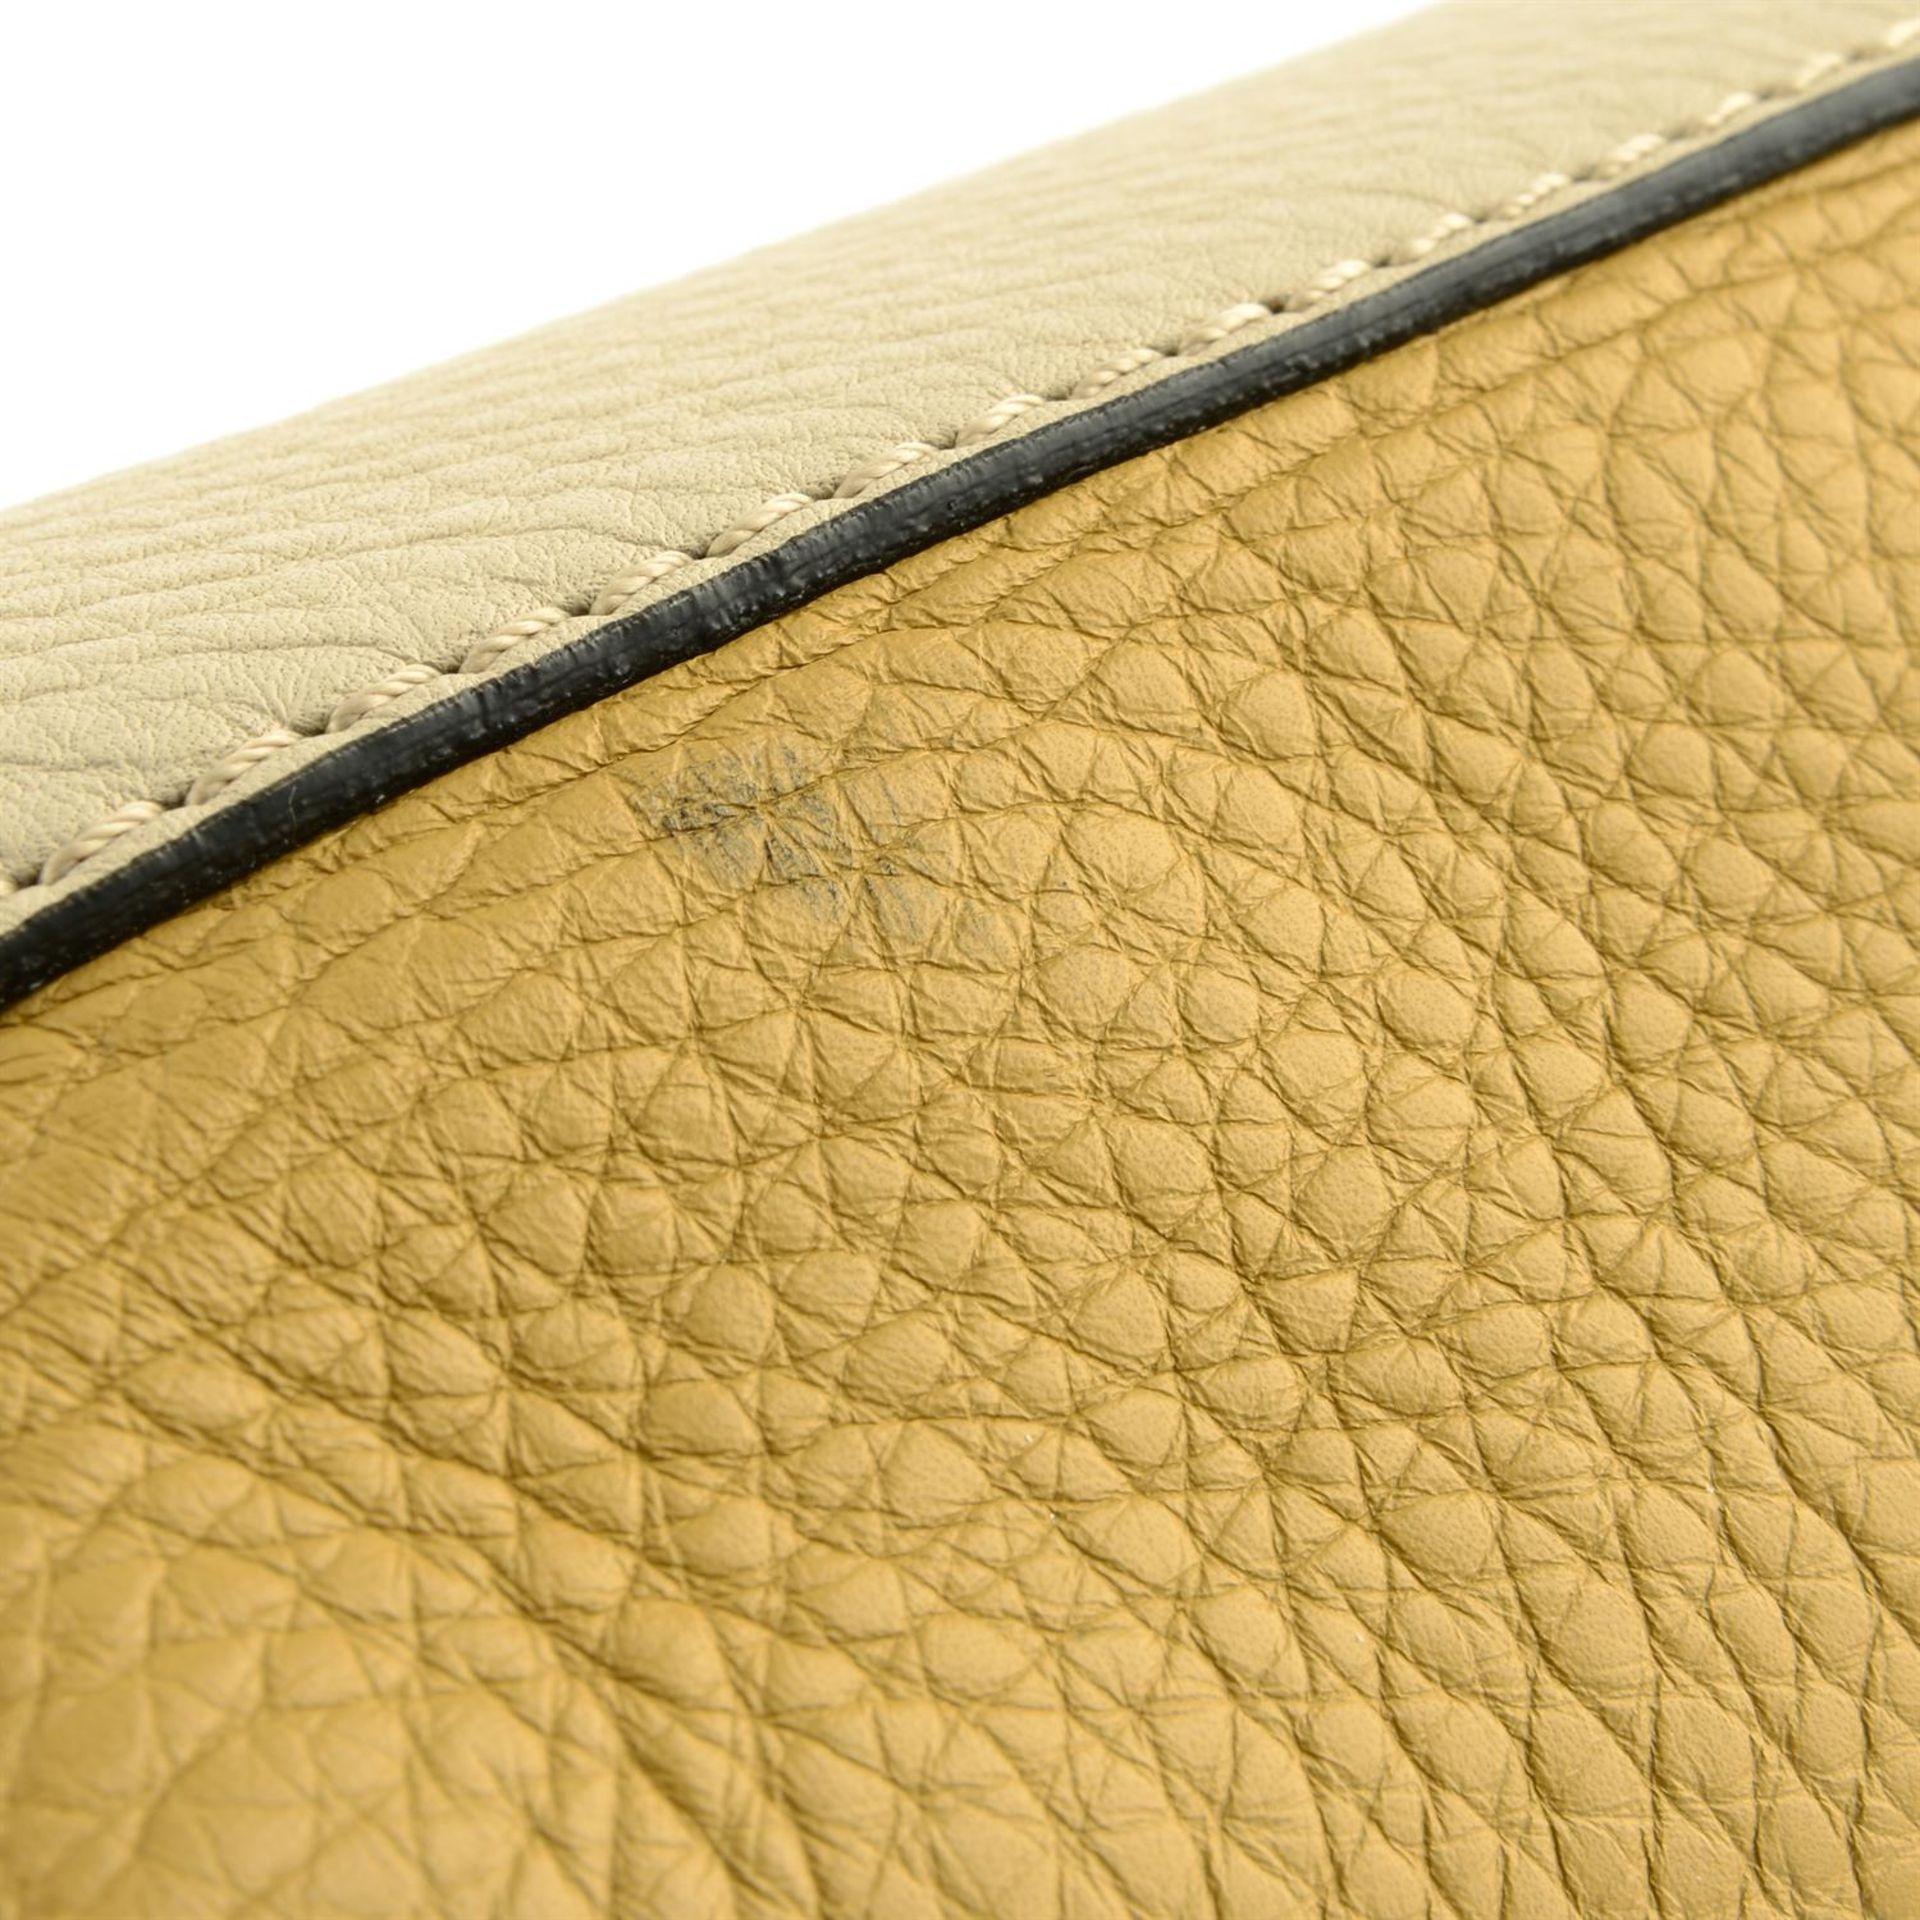 BURBERRY - a Bi-colour leather Marais clutch. - Image 5 of 6